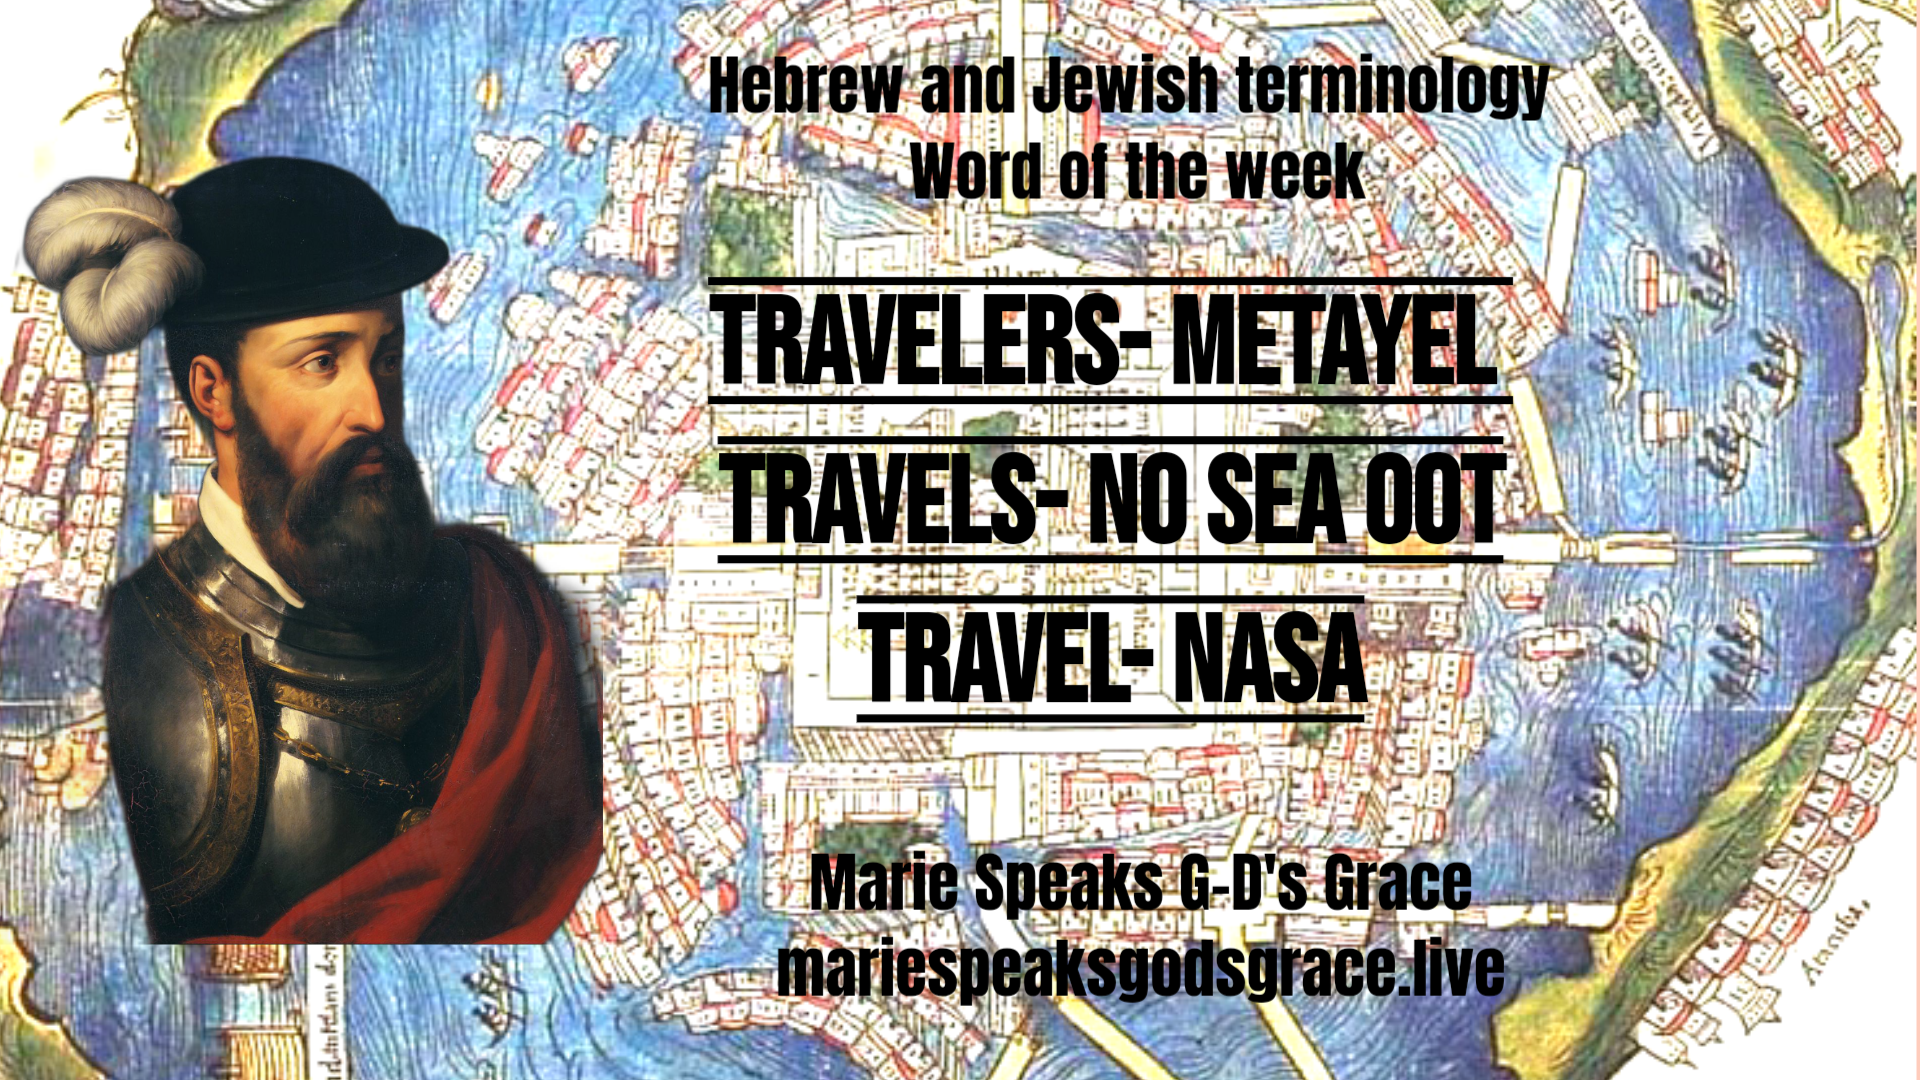 Hebrew and Jewish Terminology word of the week- Travlers-מְטַיֵּל metayel, Travel-נָסַע nasa, and Travels-נסיעות noseoot